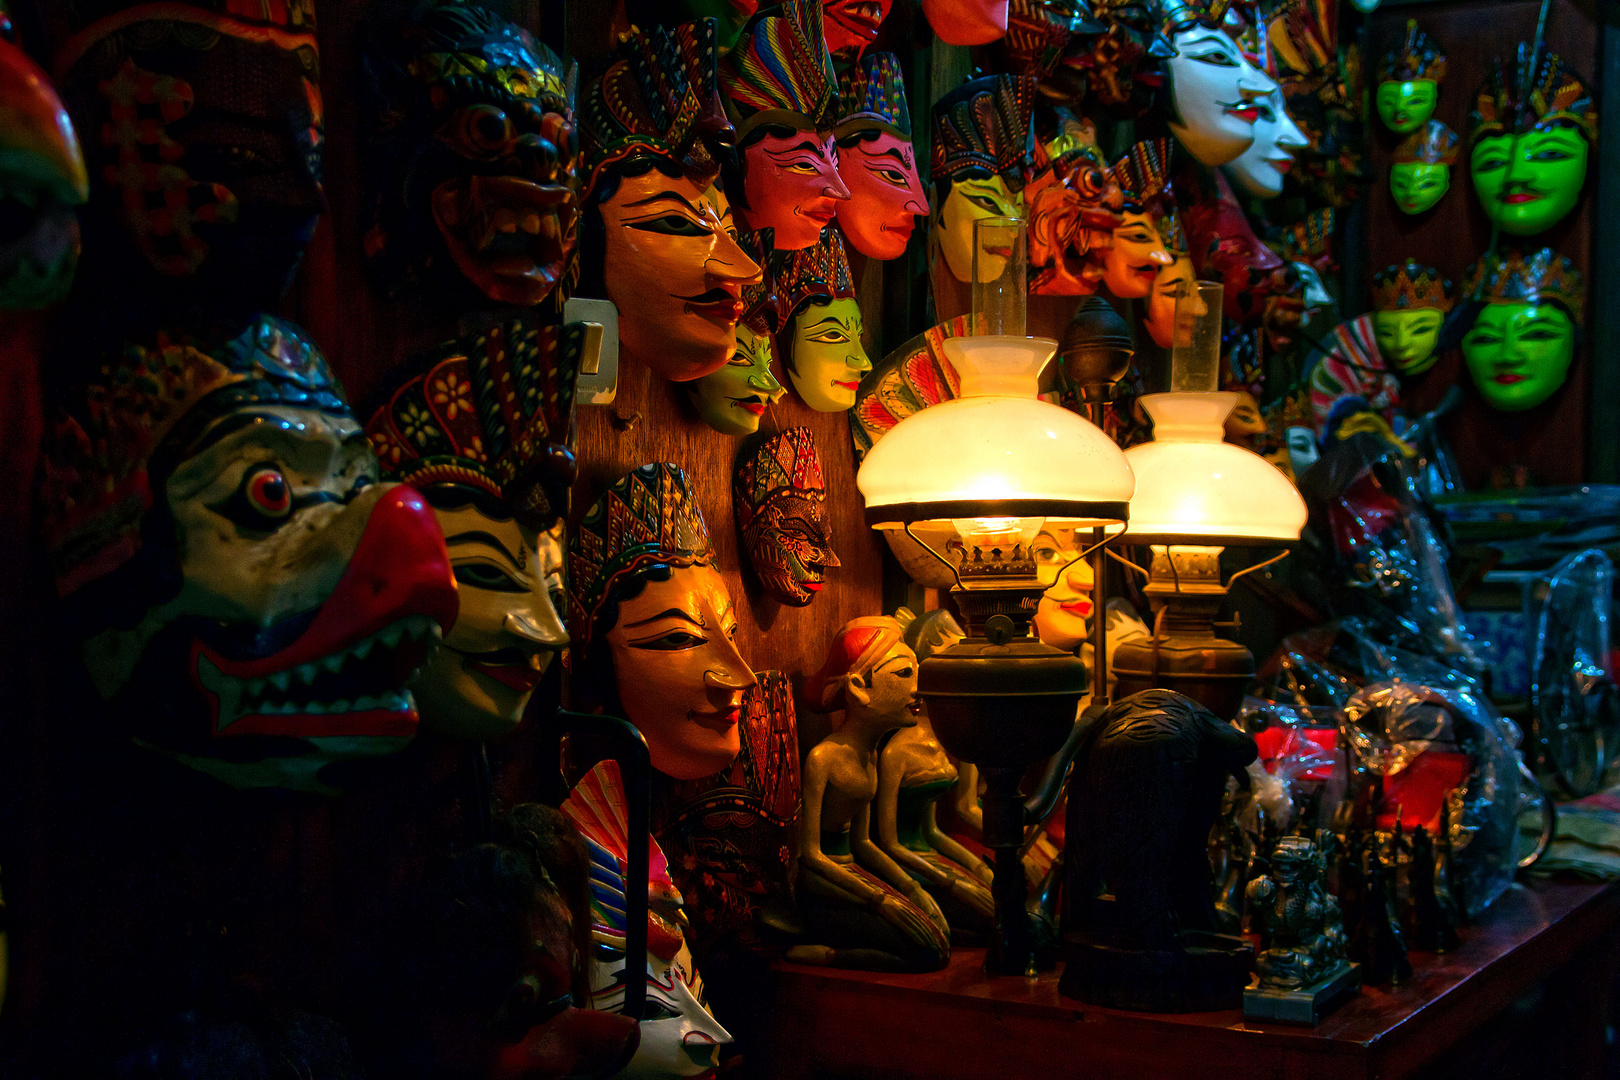 Indonesian Masks